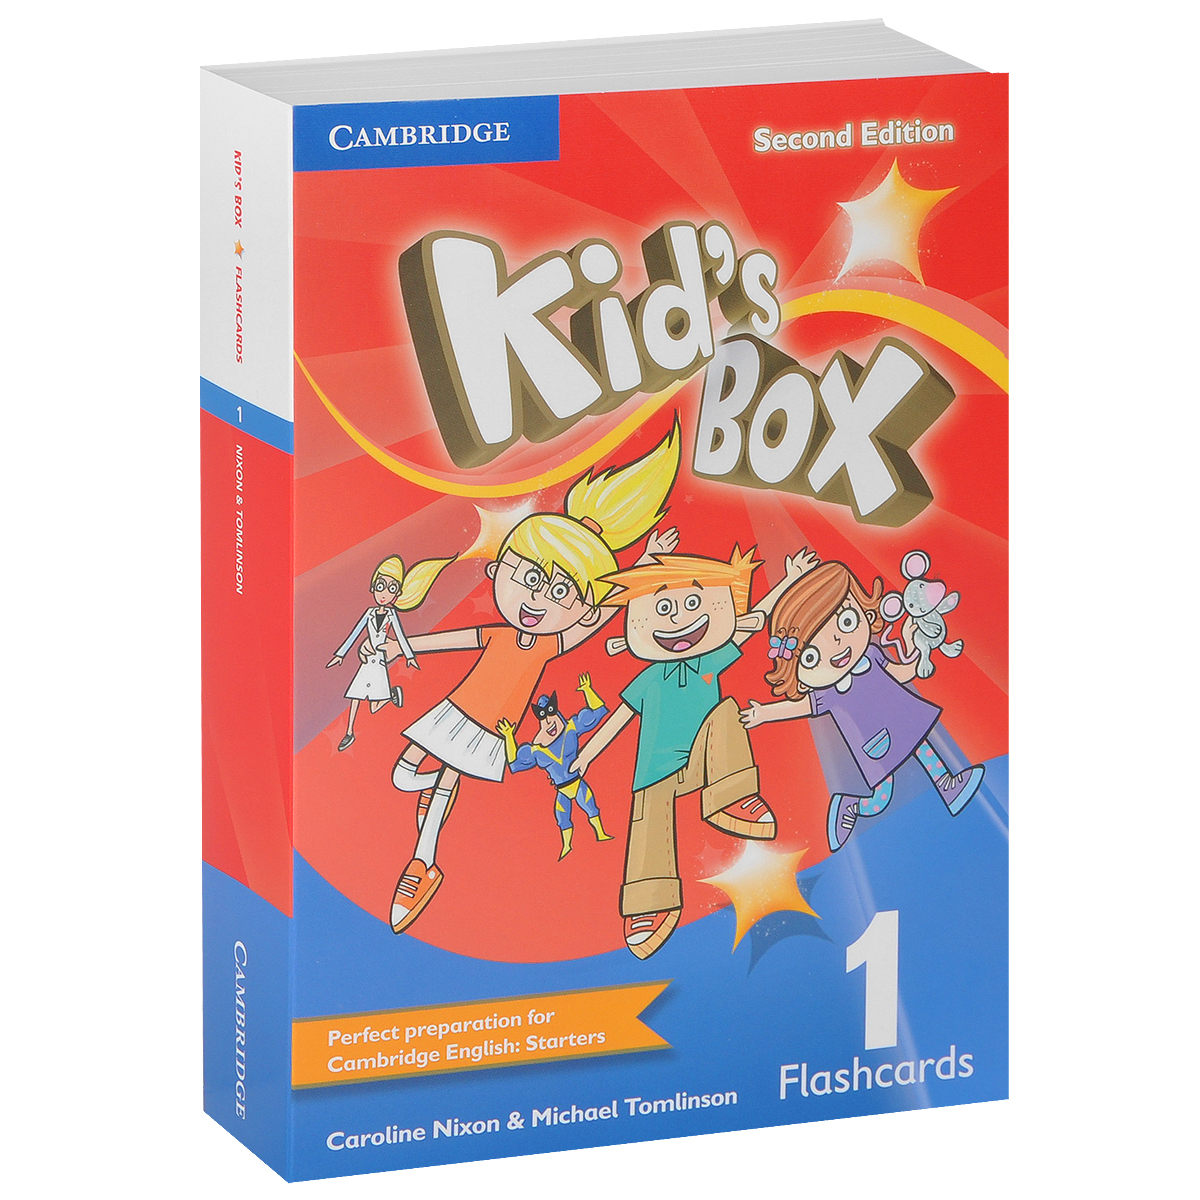 Kids box starter song. Cambridge University Press Kid's Box. Level 1. Kids Box 1 Cambridge. Kids Box 1 Flashcards игрушки. Kids Box книги.